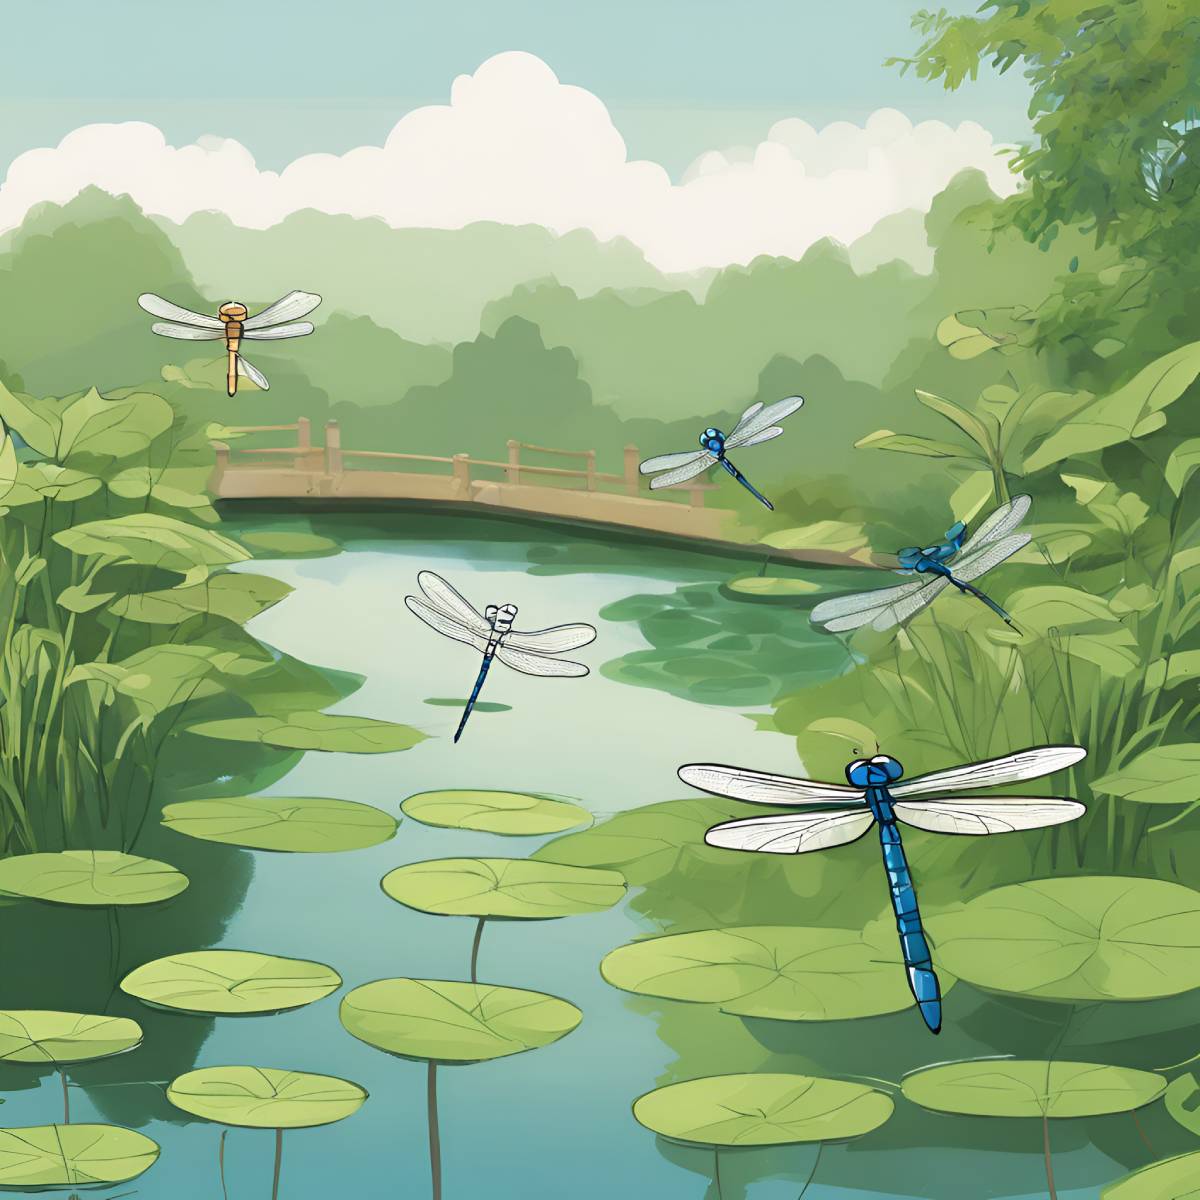 diamanti-mago-kit-pittura-diamante-Animali-Dragonfly-Dragonflies-by-the-Pond-original.jpg